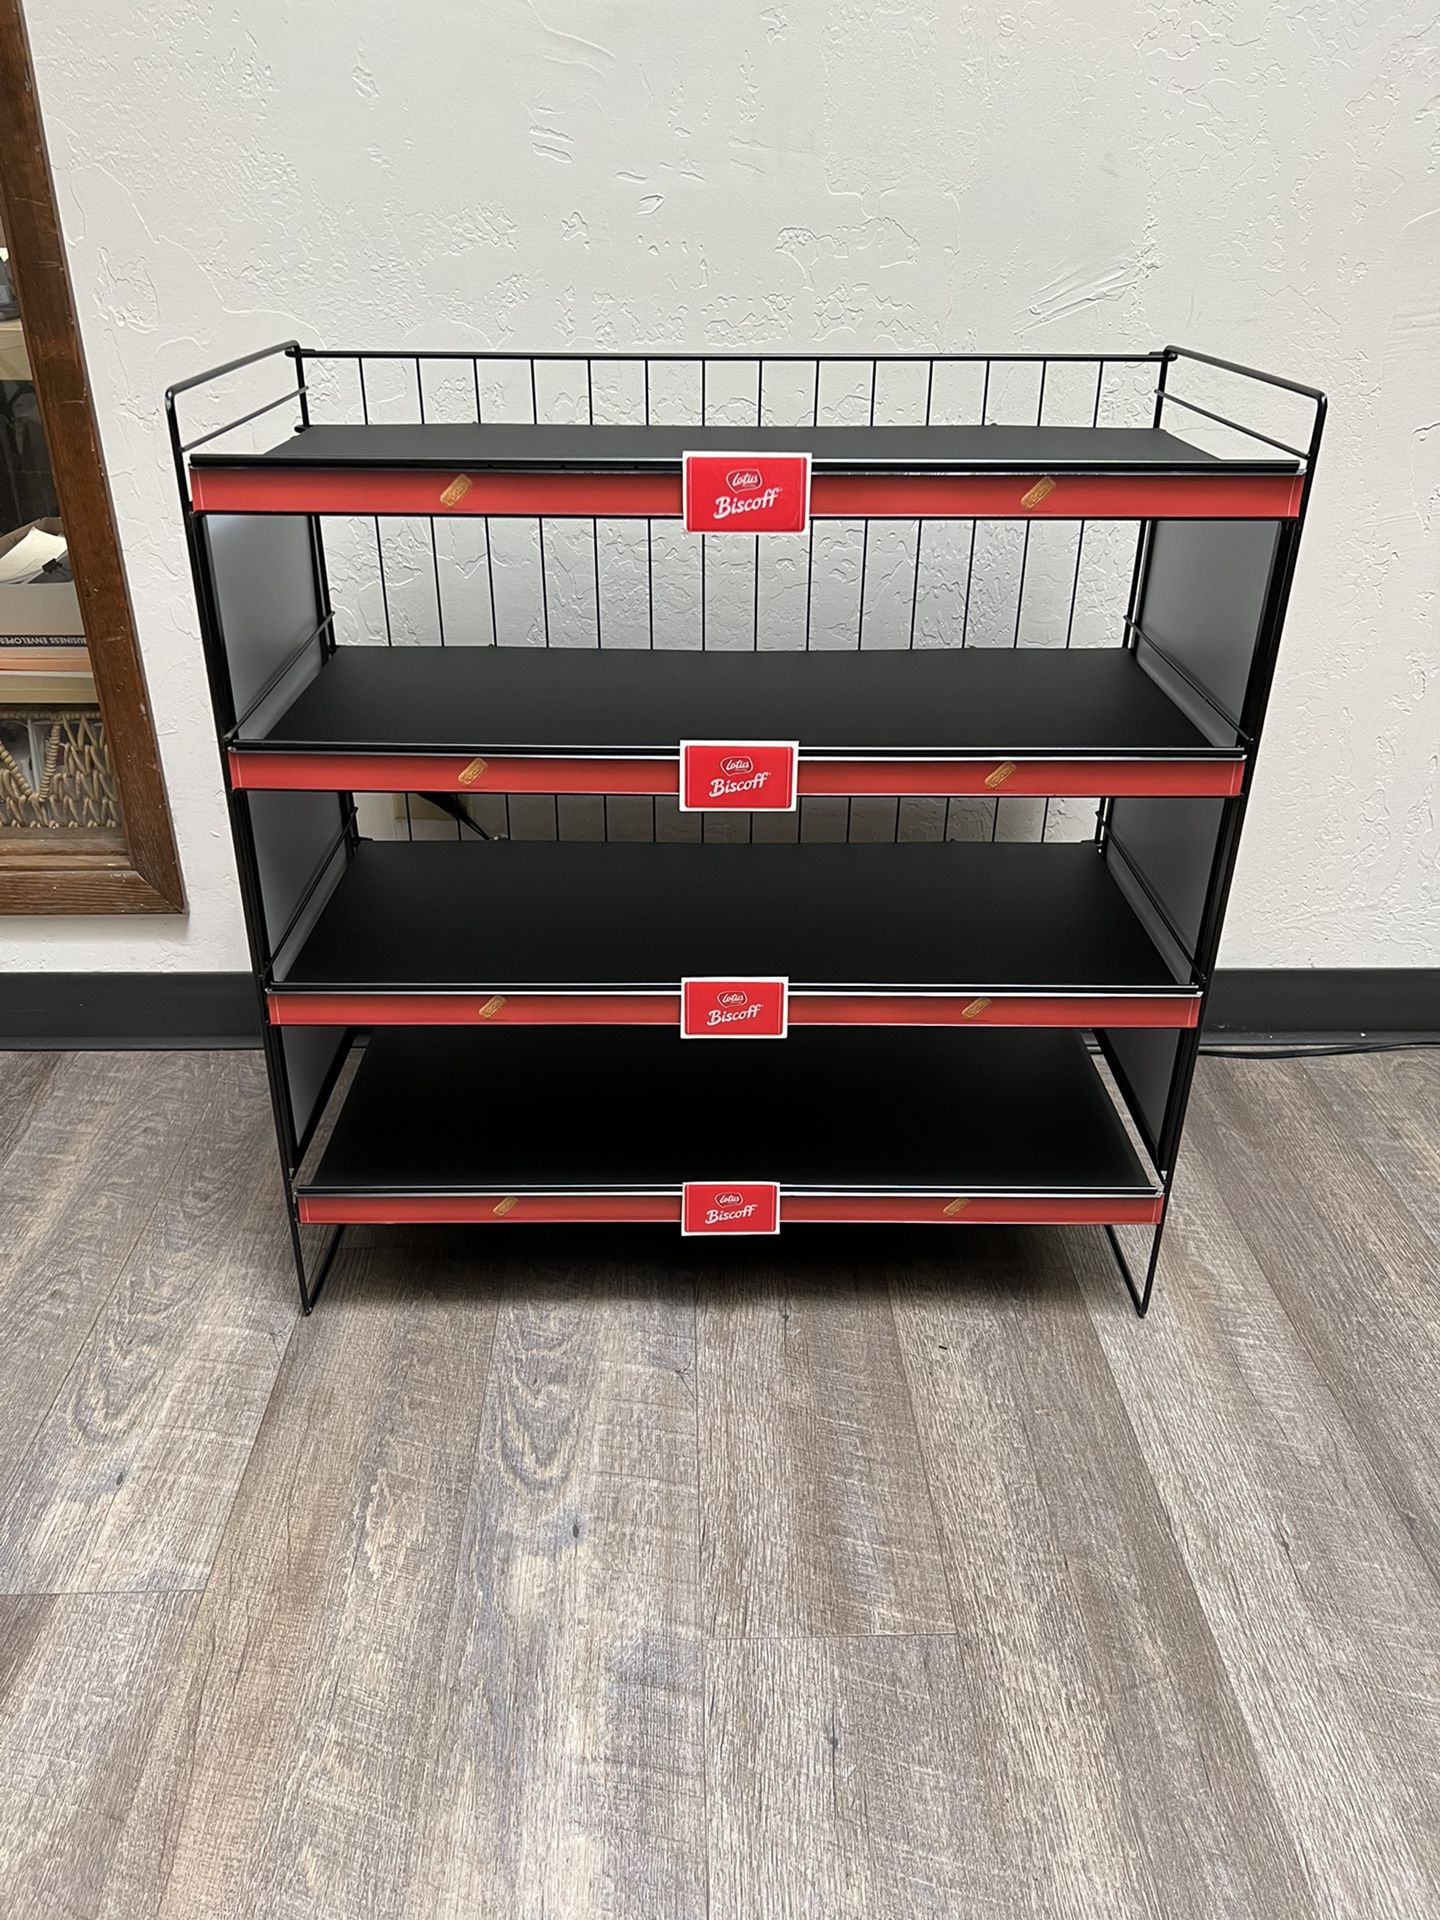 4 Tier Retail Display Shelf Merchandise Display Rack  W/ Branding & Shelf Liners